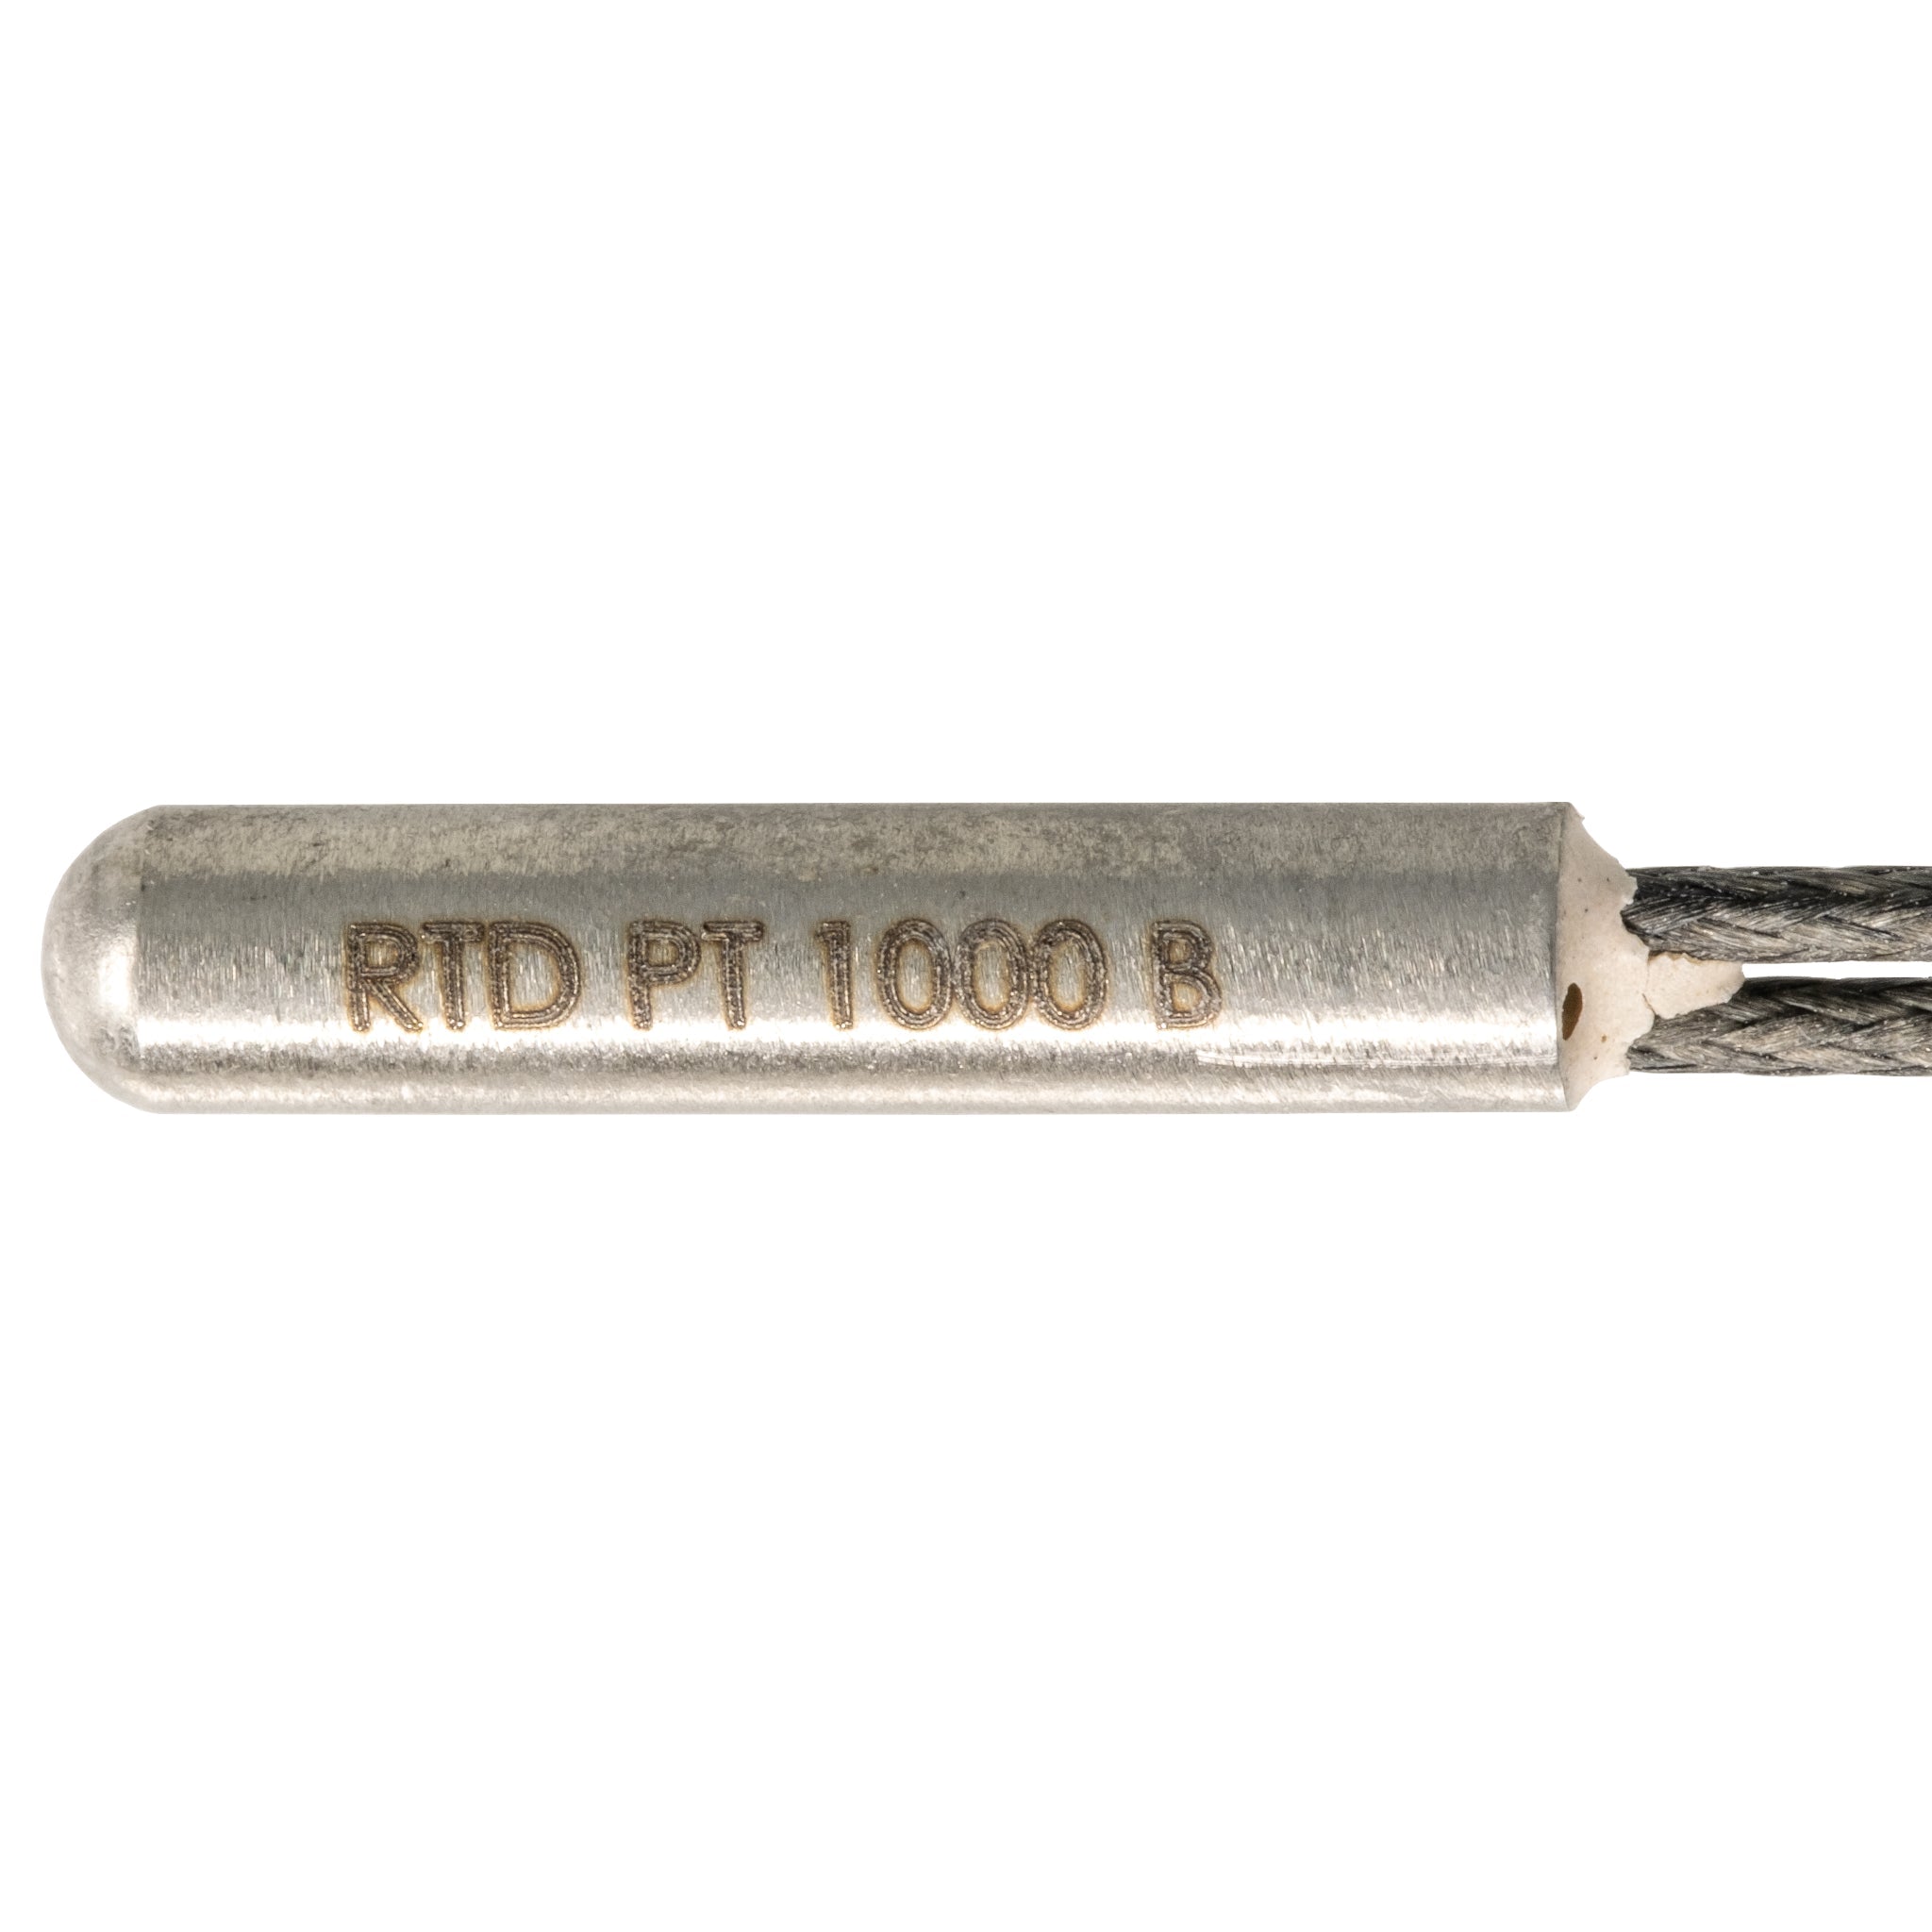 Pt1000 Resistance Temperature Detector (RTD) Thermistor - West3D Printing - Slice Engineering